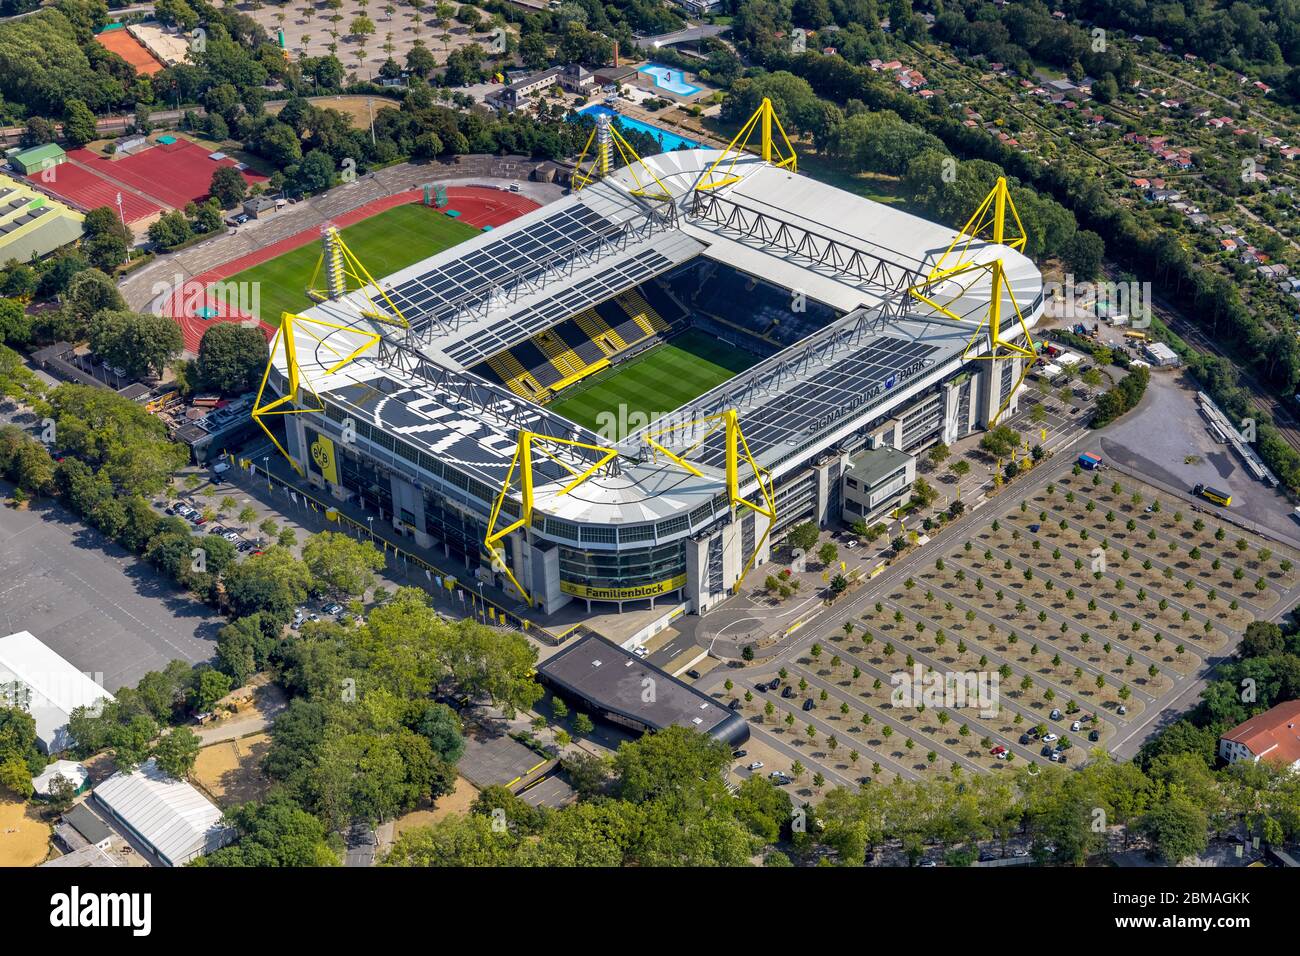 stadium Westfalenstadion of Dortmund BVB, 08.08.2019, aerial view, Germany, North Rhine-Westphalia, Ruhr Area, Dortmund Stock Photo